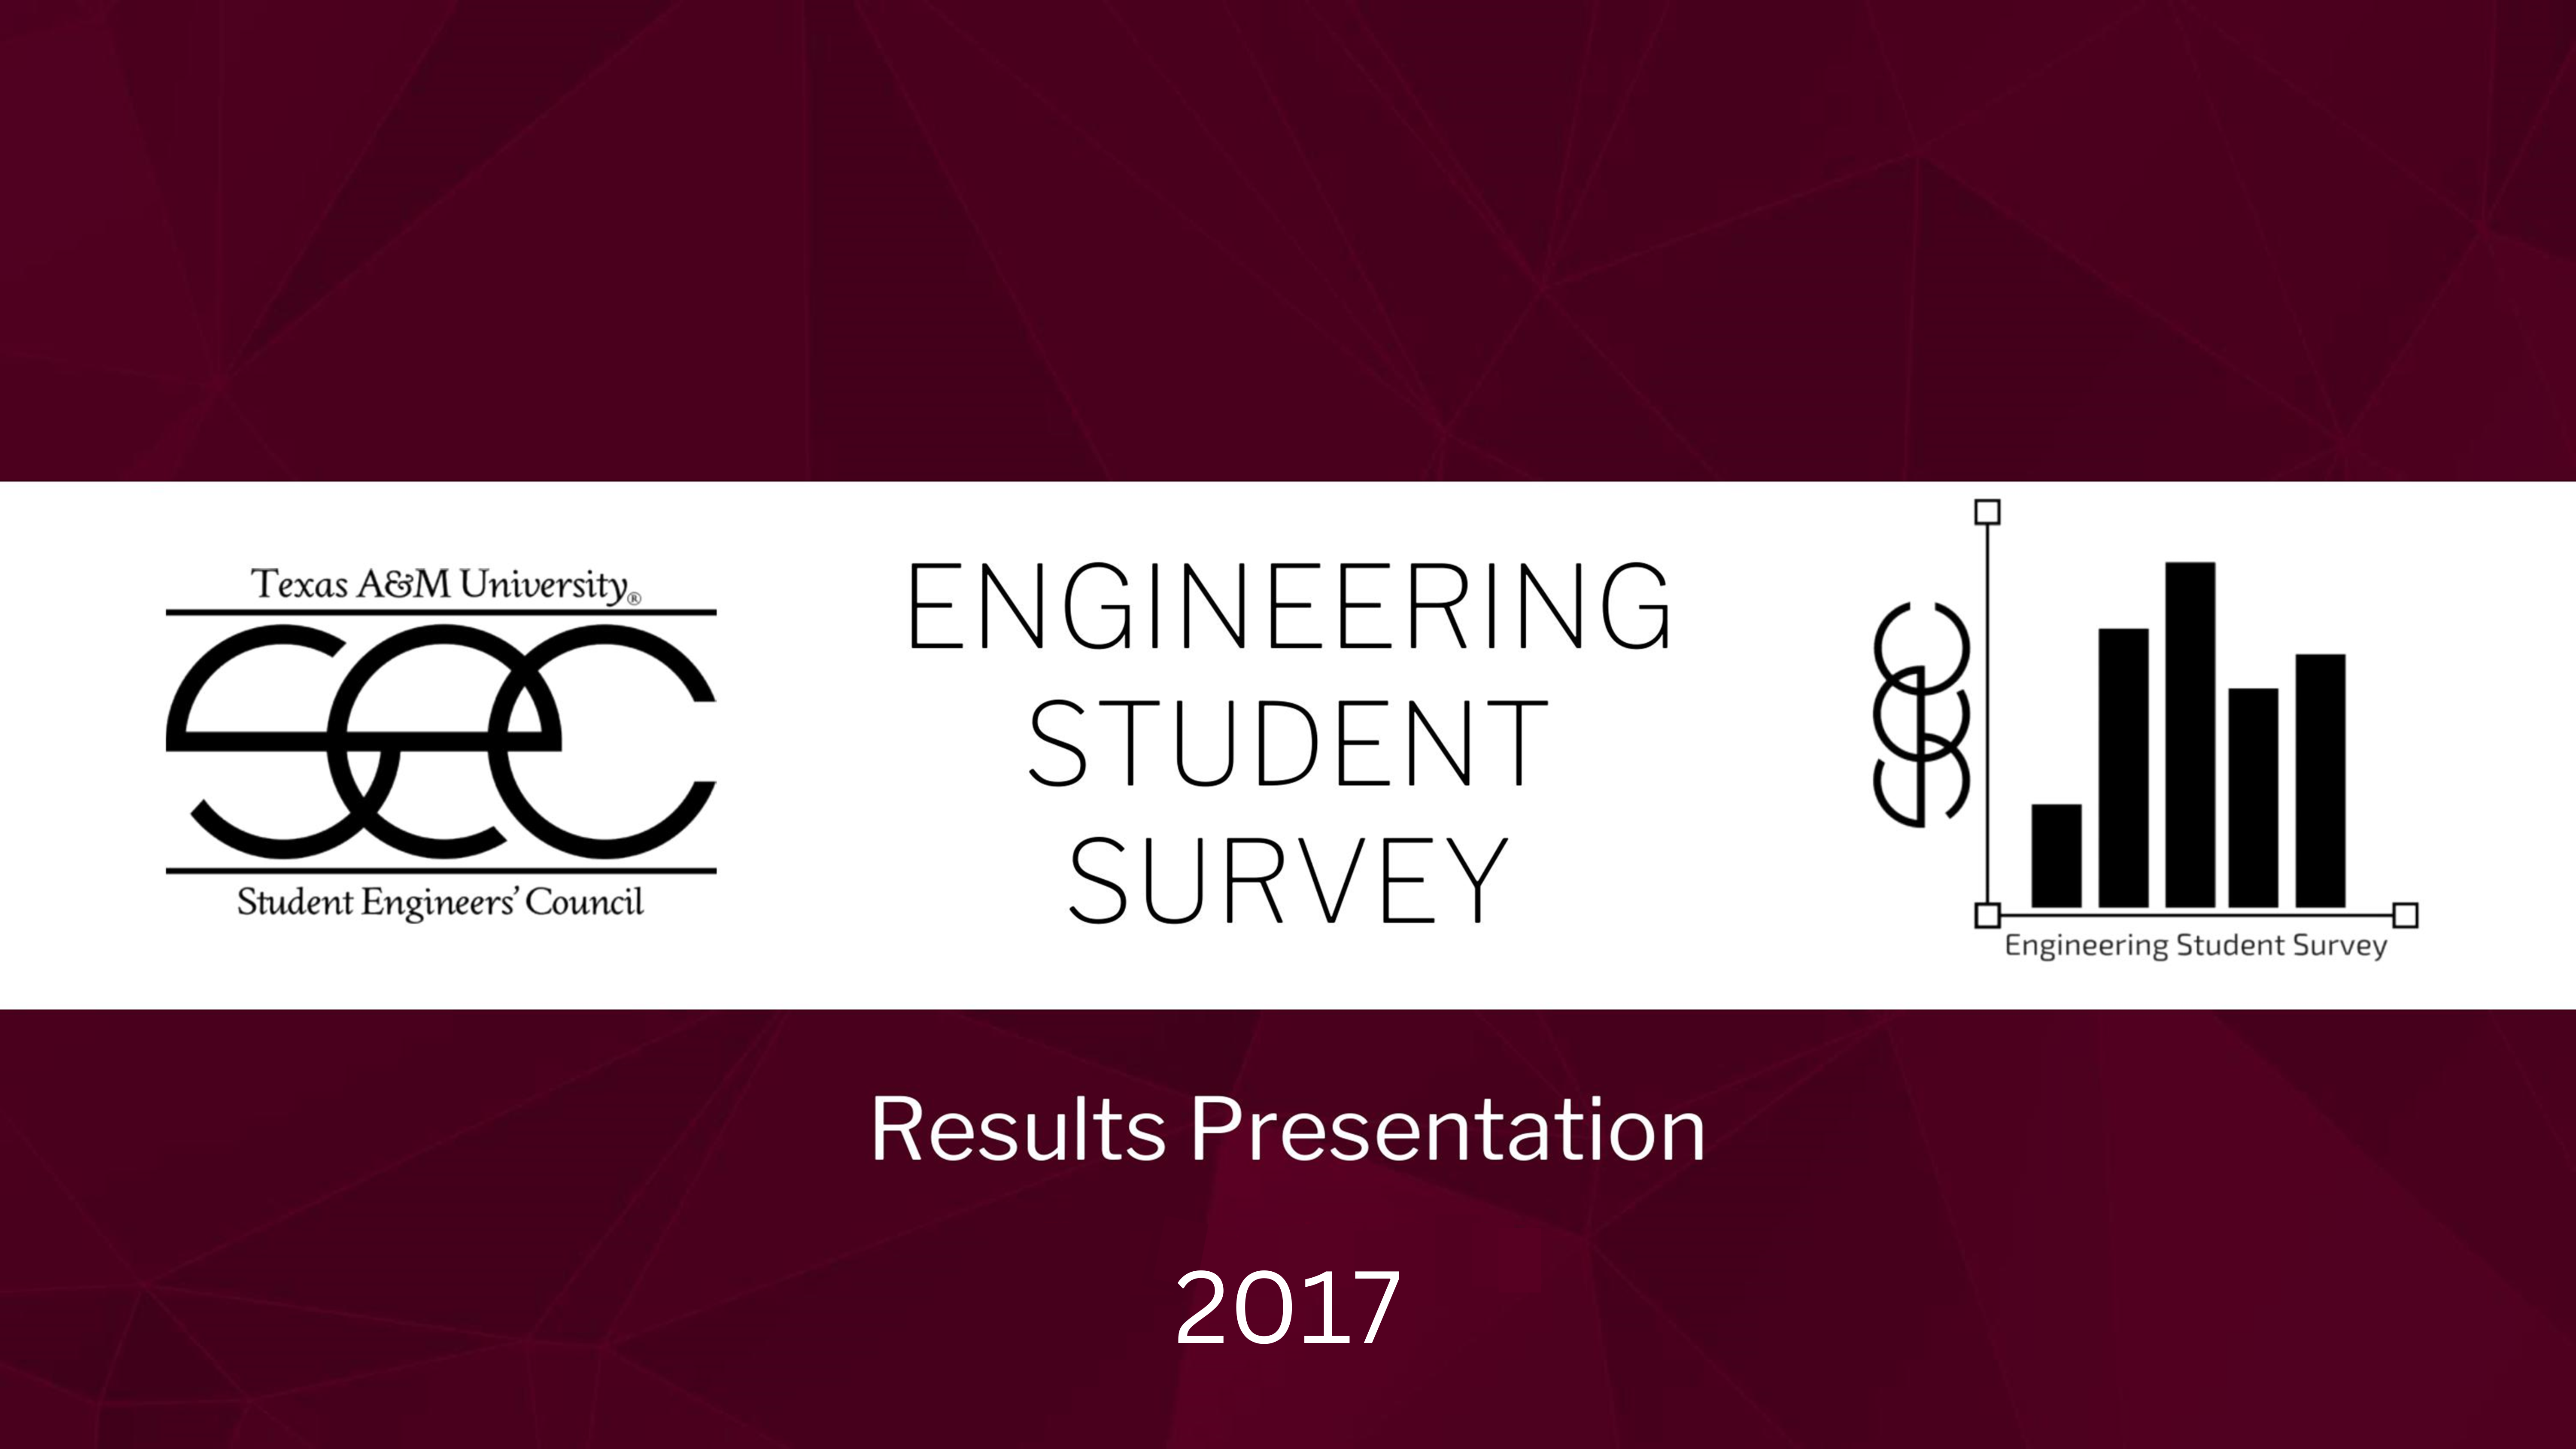 2016 Engineering Student Survey